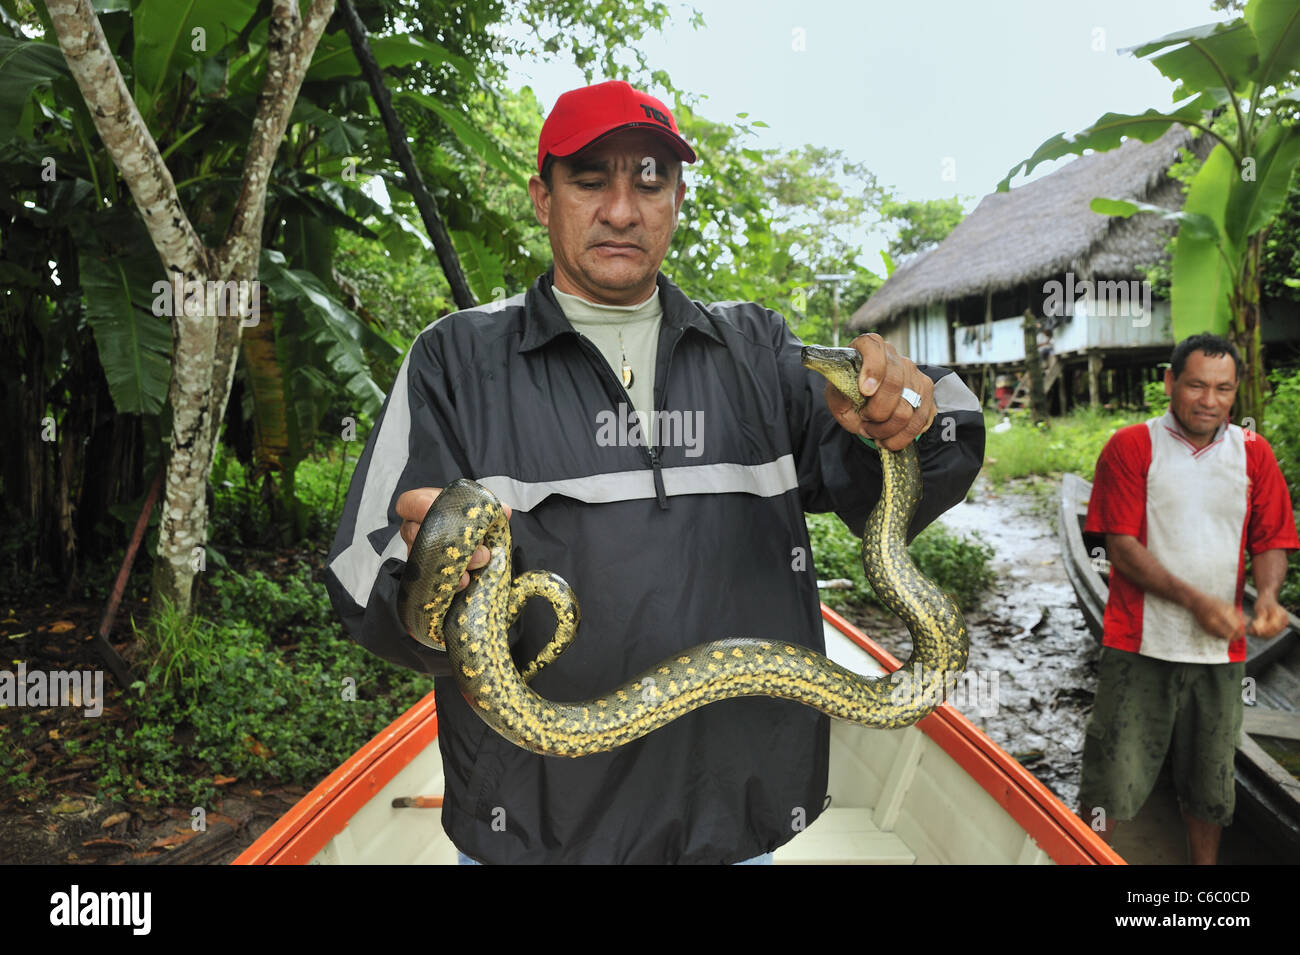 Tour Guide holding captured snake, Amazon River, Peru Stock Photo